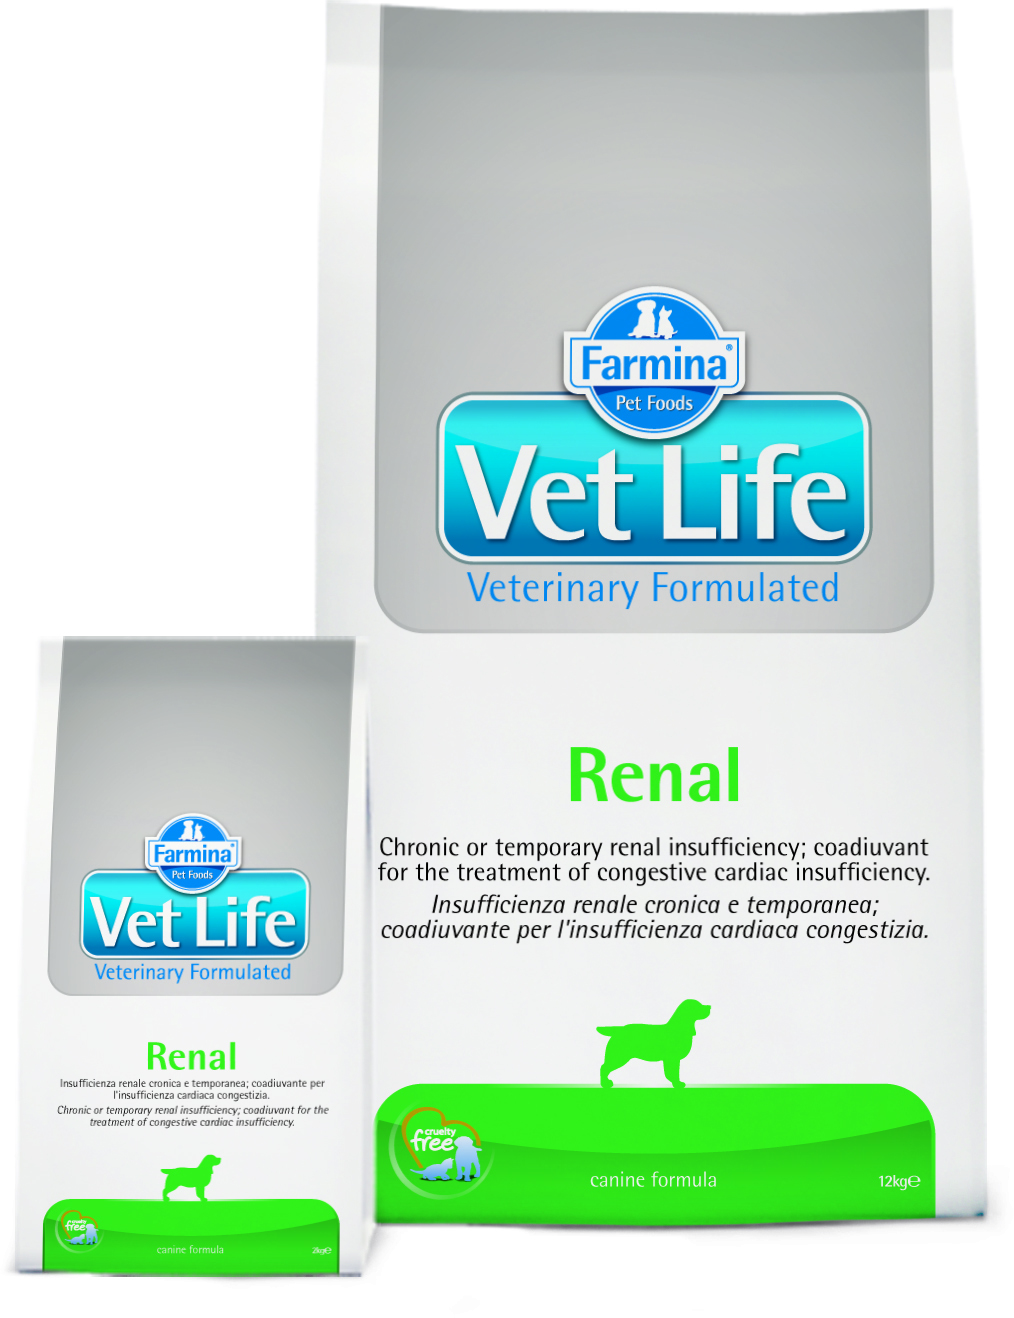 Farmina vet Life Dog renal 2 кг. Farmina vet Life renal. Сухой корм для собак Farmina vet Life renal, при заболеваниях почек 2 кг. Vet Life корм renal для собак.